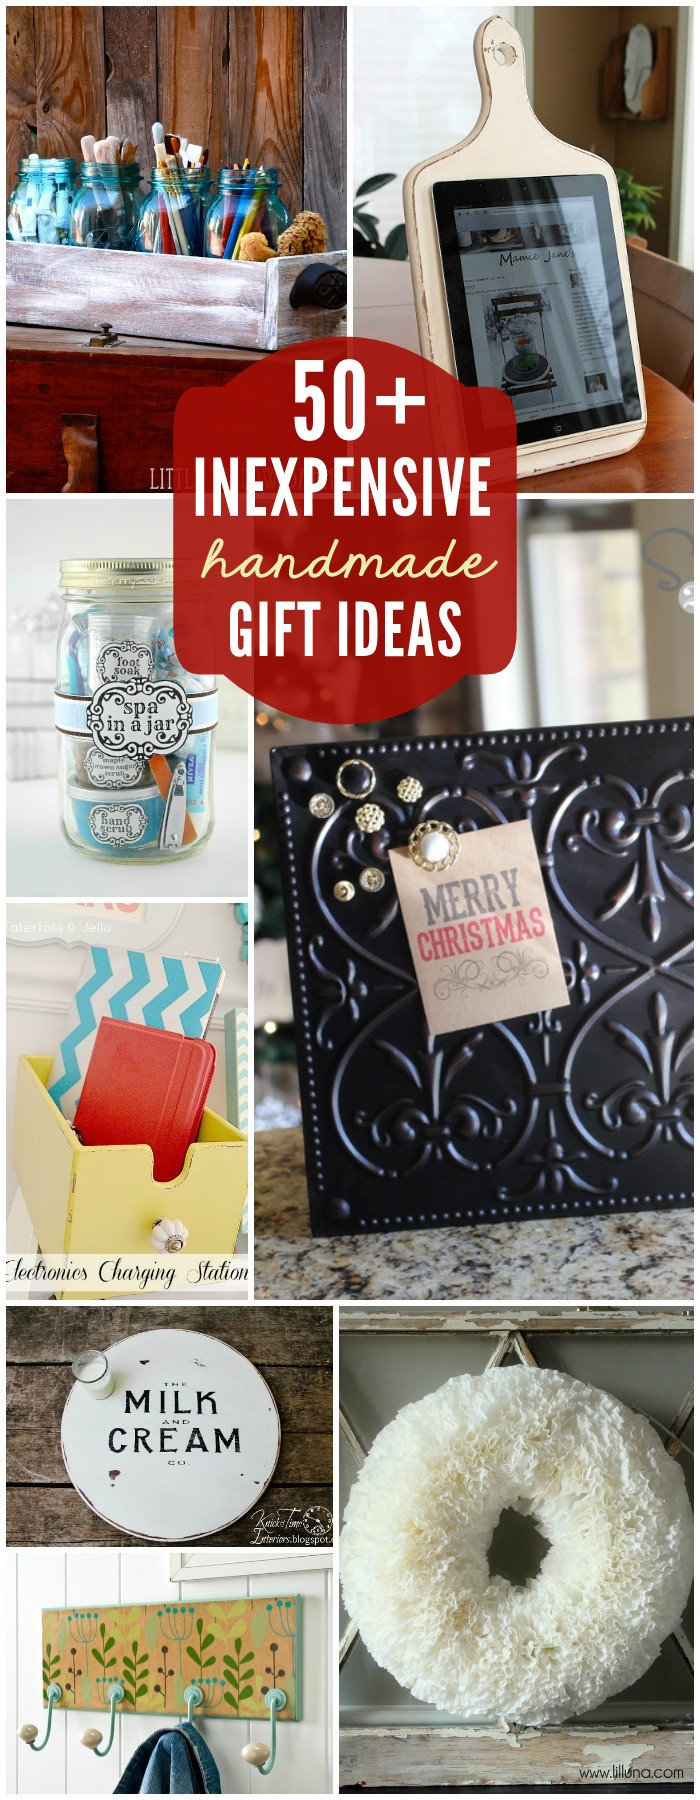 DIY Christmas Gift Baskets Ideas
 Inexpensive Birthday Gift Ideas